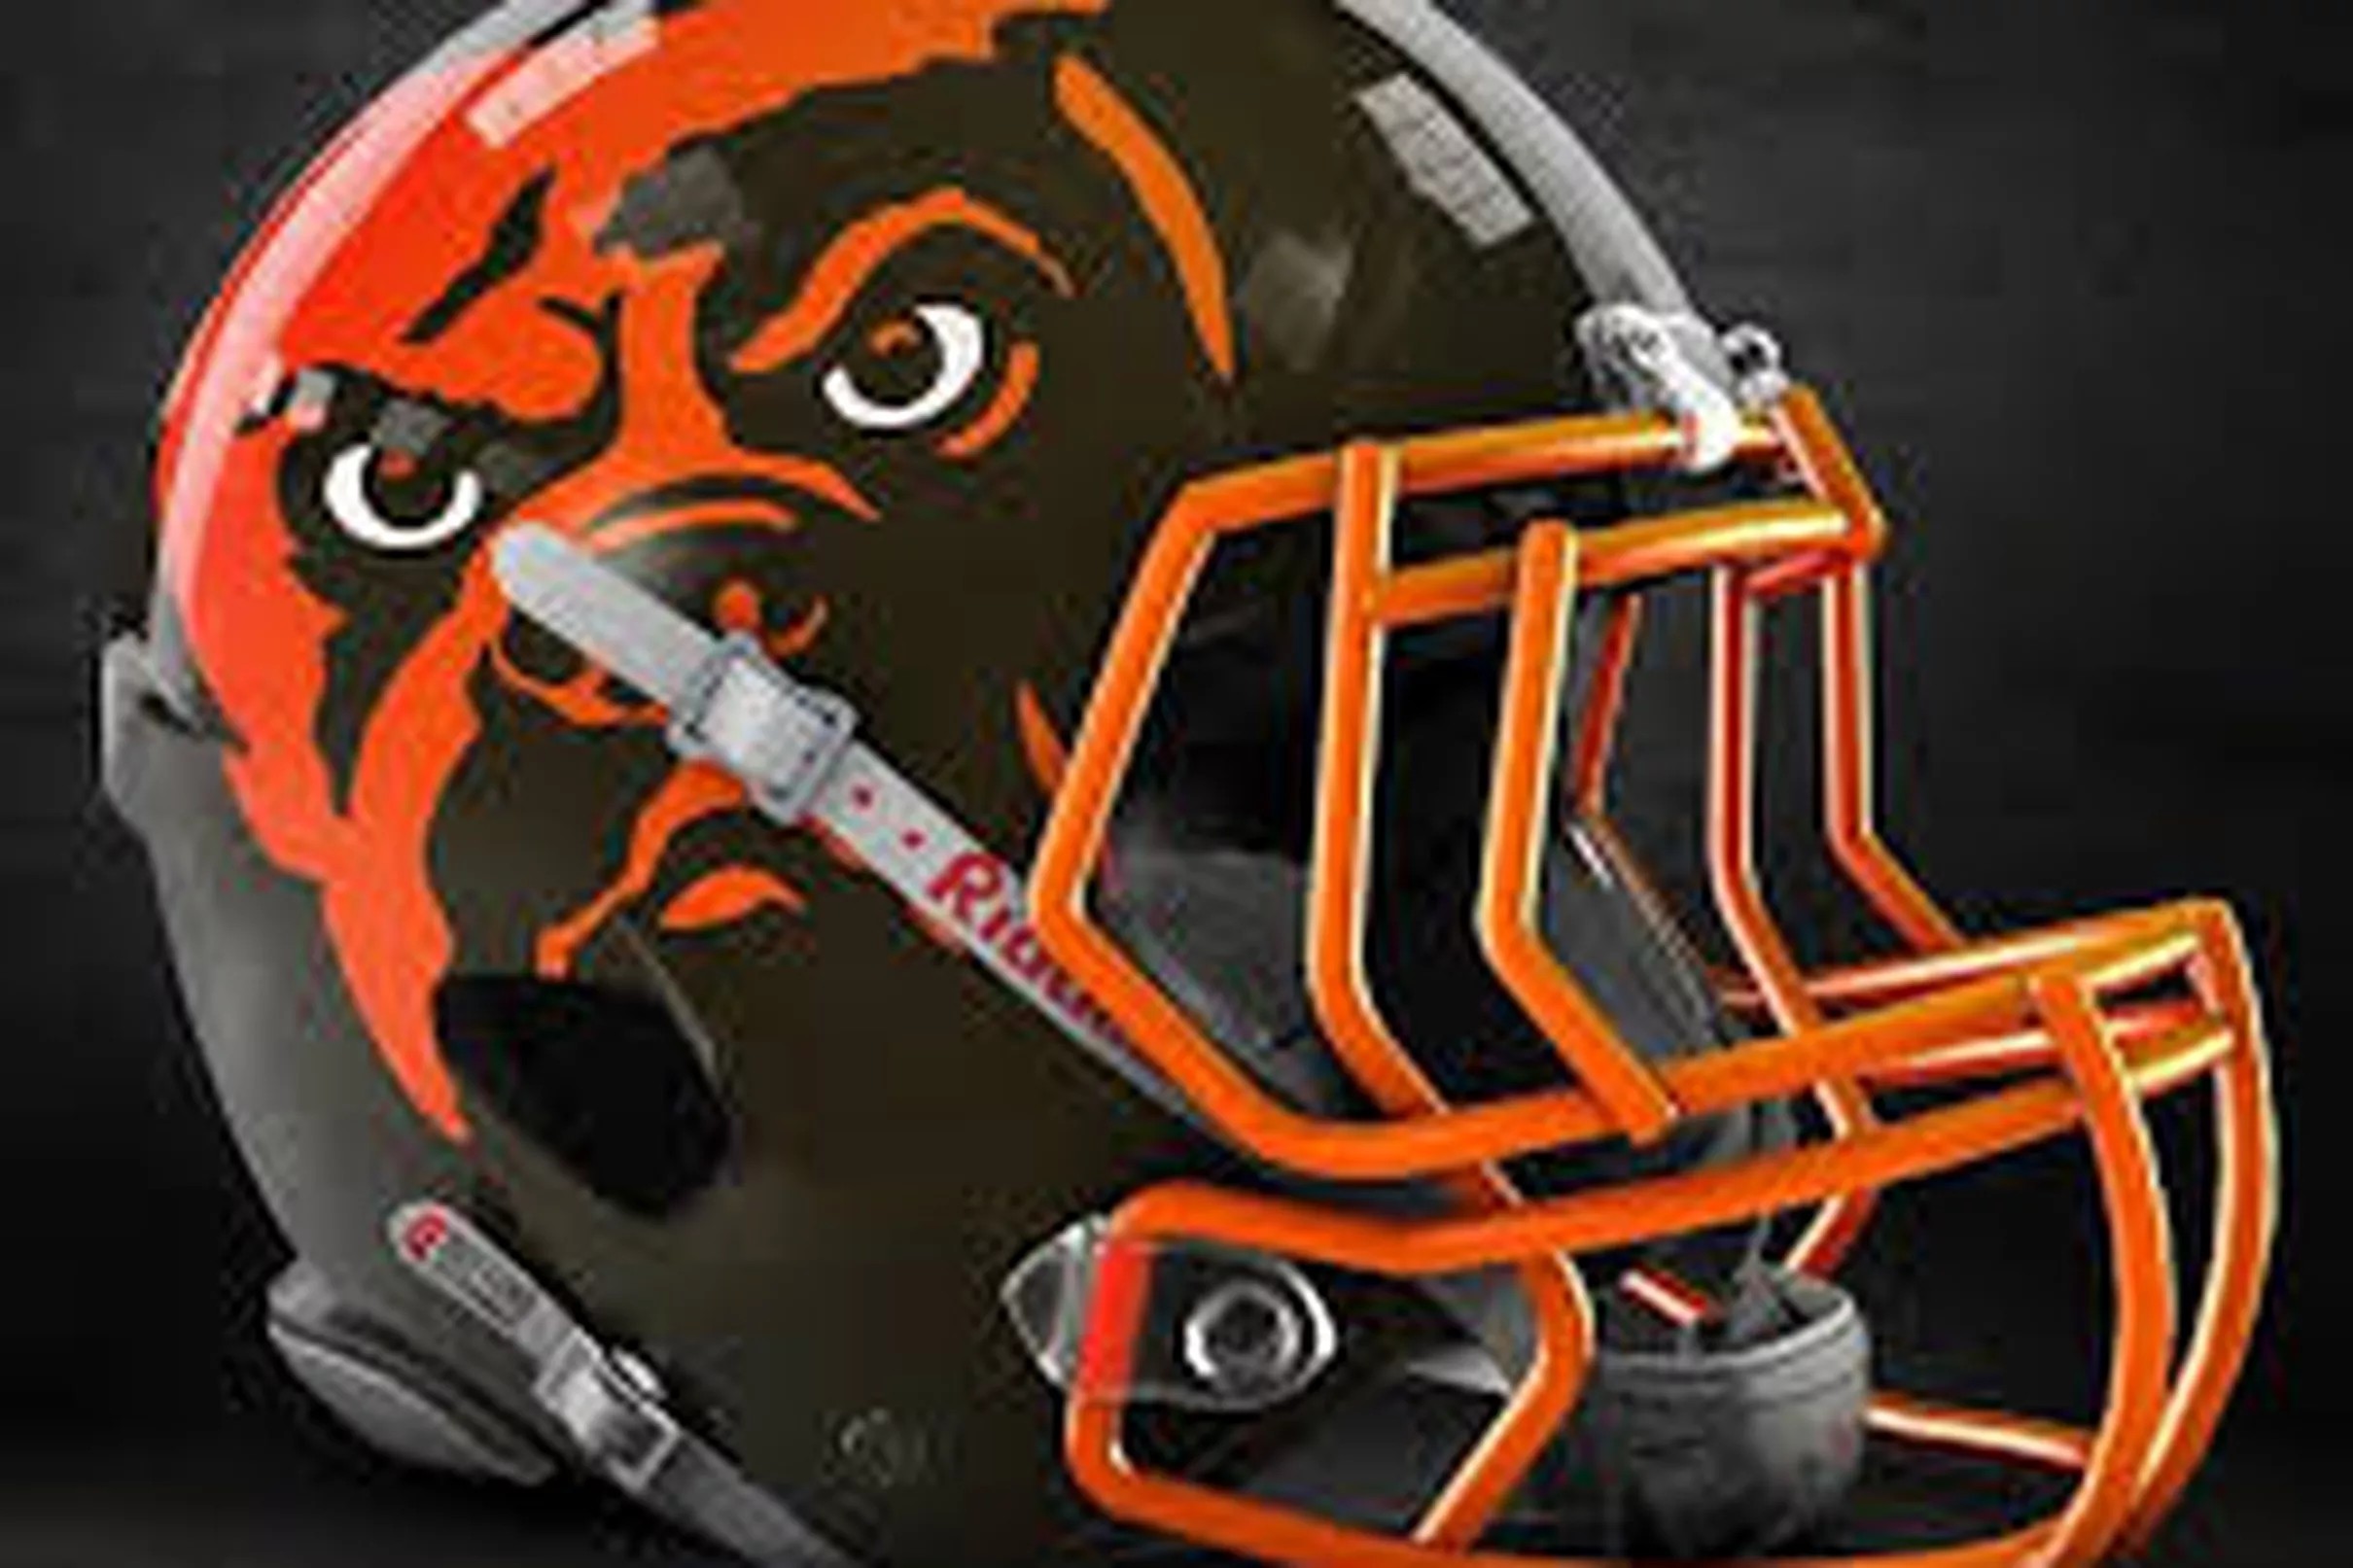 Alternate Cleveland Browns helmet designs